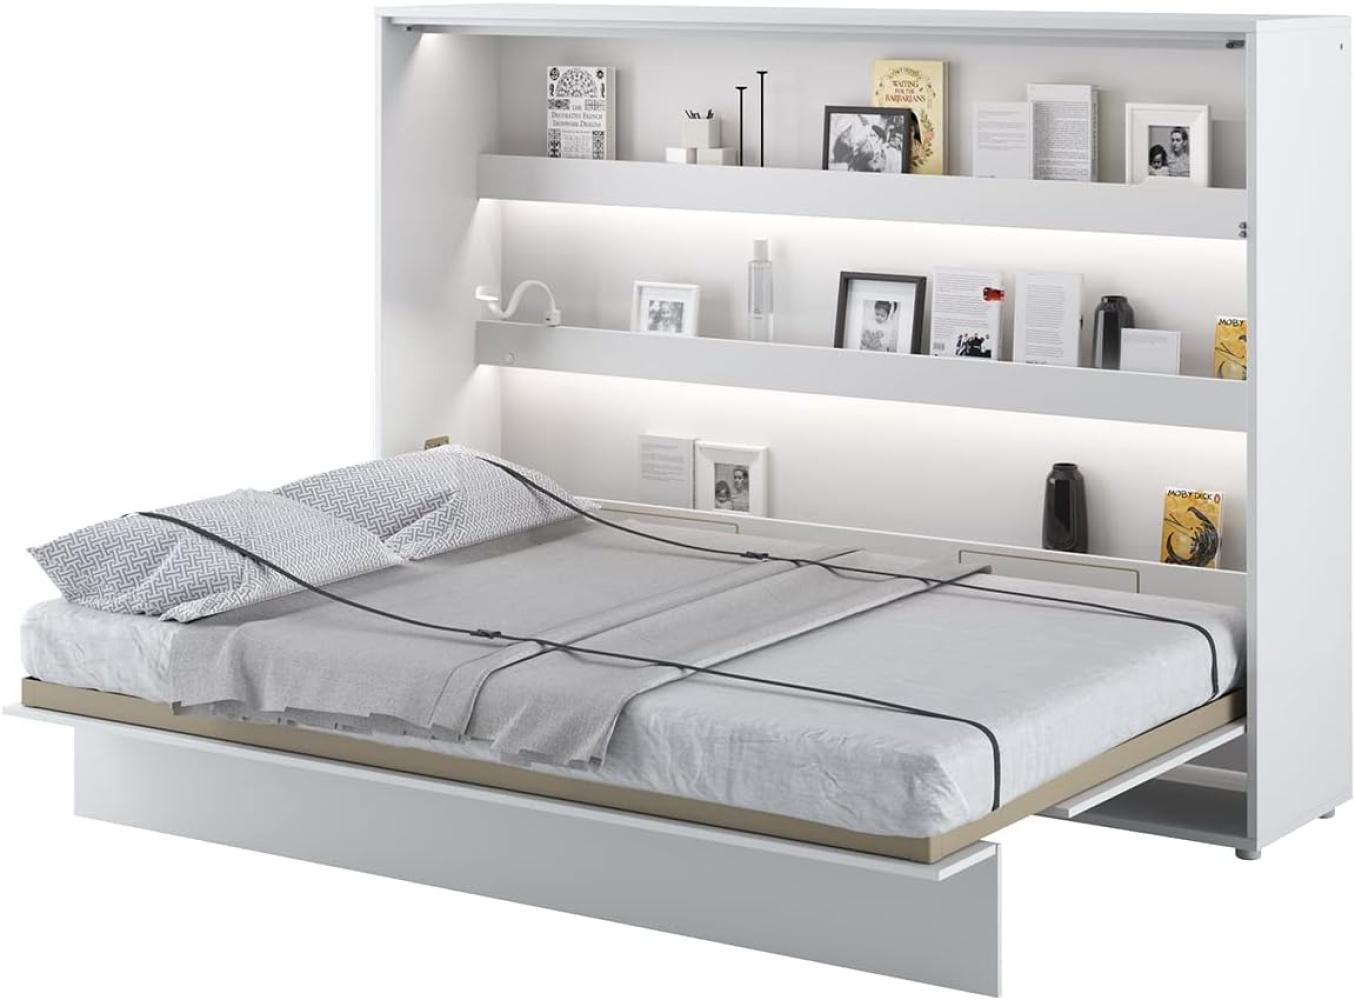 MEBLINI Schrankbett Bed Concept - Wandbett mit Lattenrost - Klappbett mit Schrank - Wandklappbett - Murp hy Bed - Bettschrank - BC-04 - 140x200cm Horizontal - Weiß Matt Bild 1